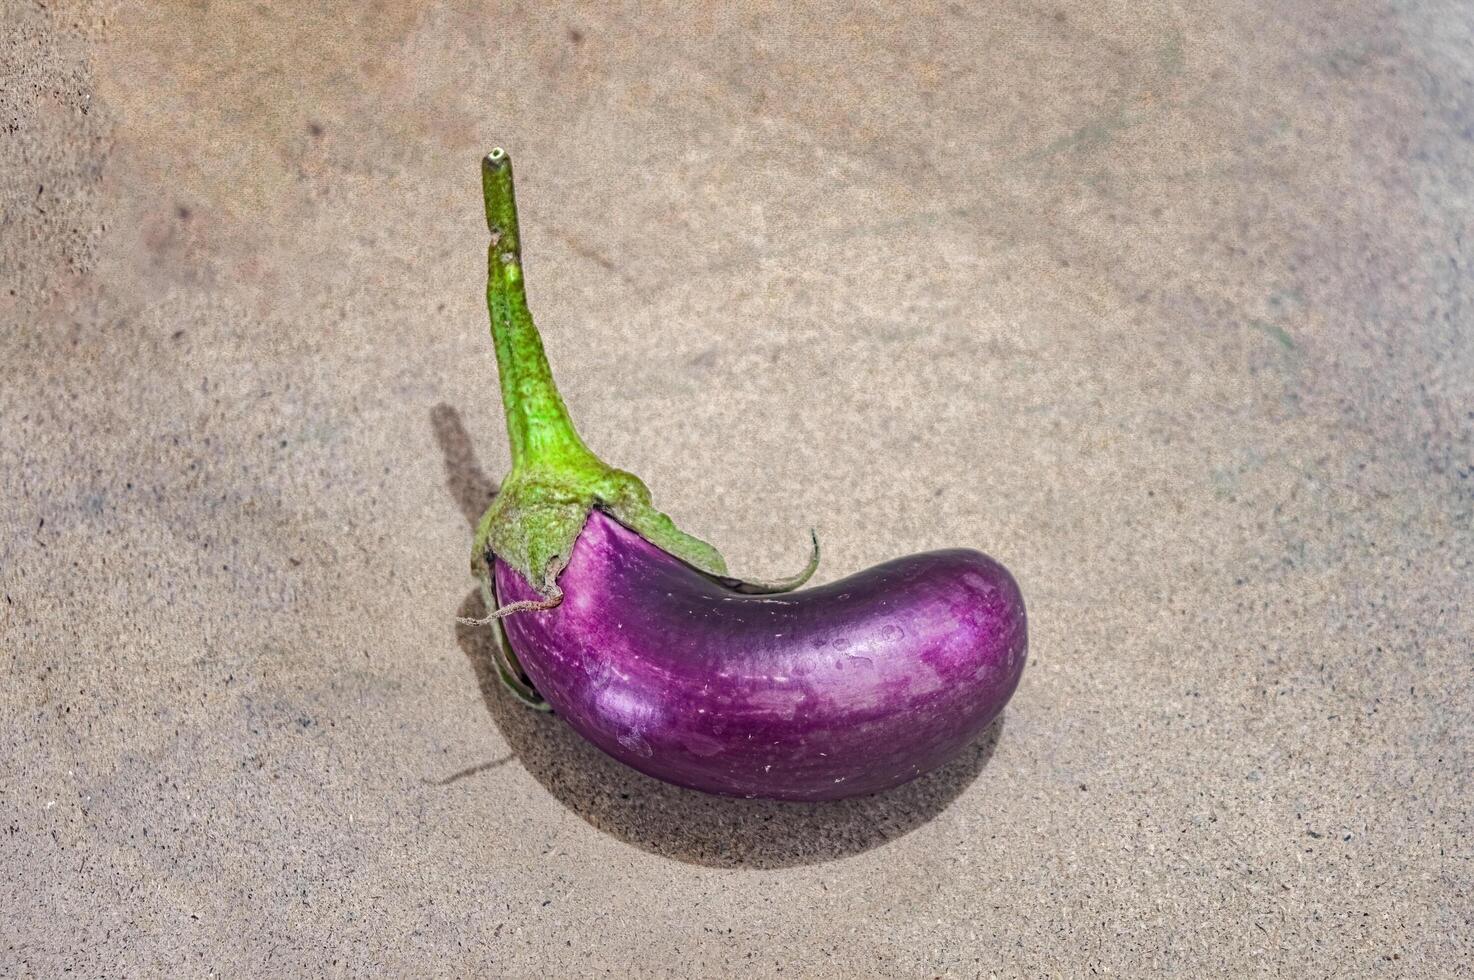 un melanzana o viola Solanum melongena dire bugie su un' di legno tavola foto